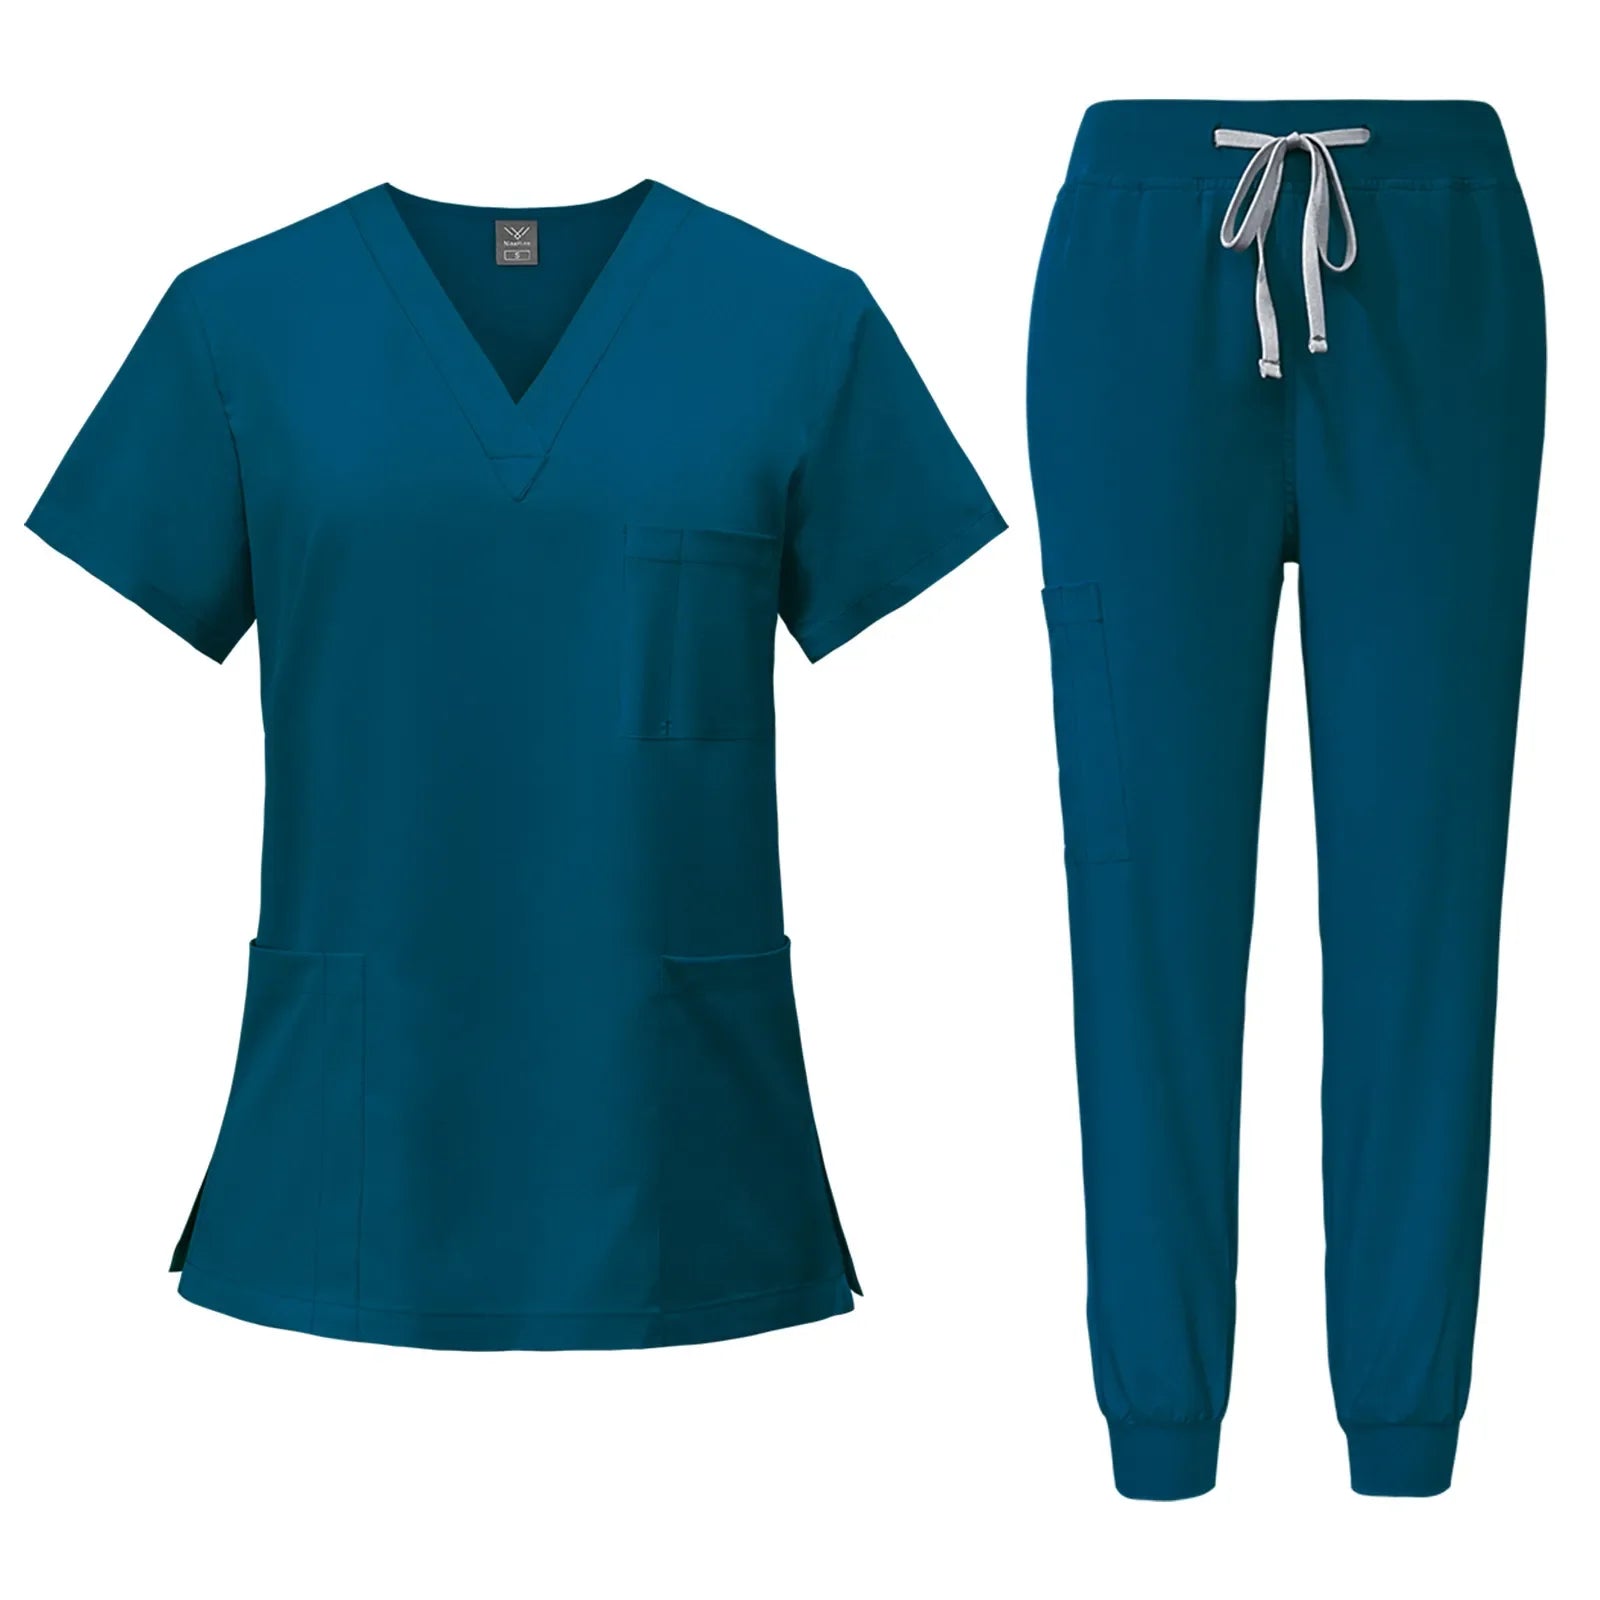 Multicolor Unisex Short Sleeved Pharmacy - Nurse Uniform Hospital Doctor Workwear - Oral Dental Surgery Uniforms Medical Scrubs - Sets  Nurse Uniform price in Pakistan